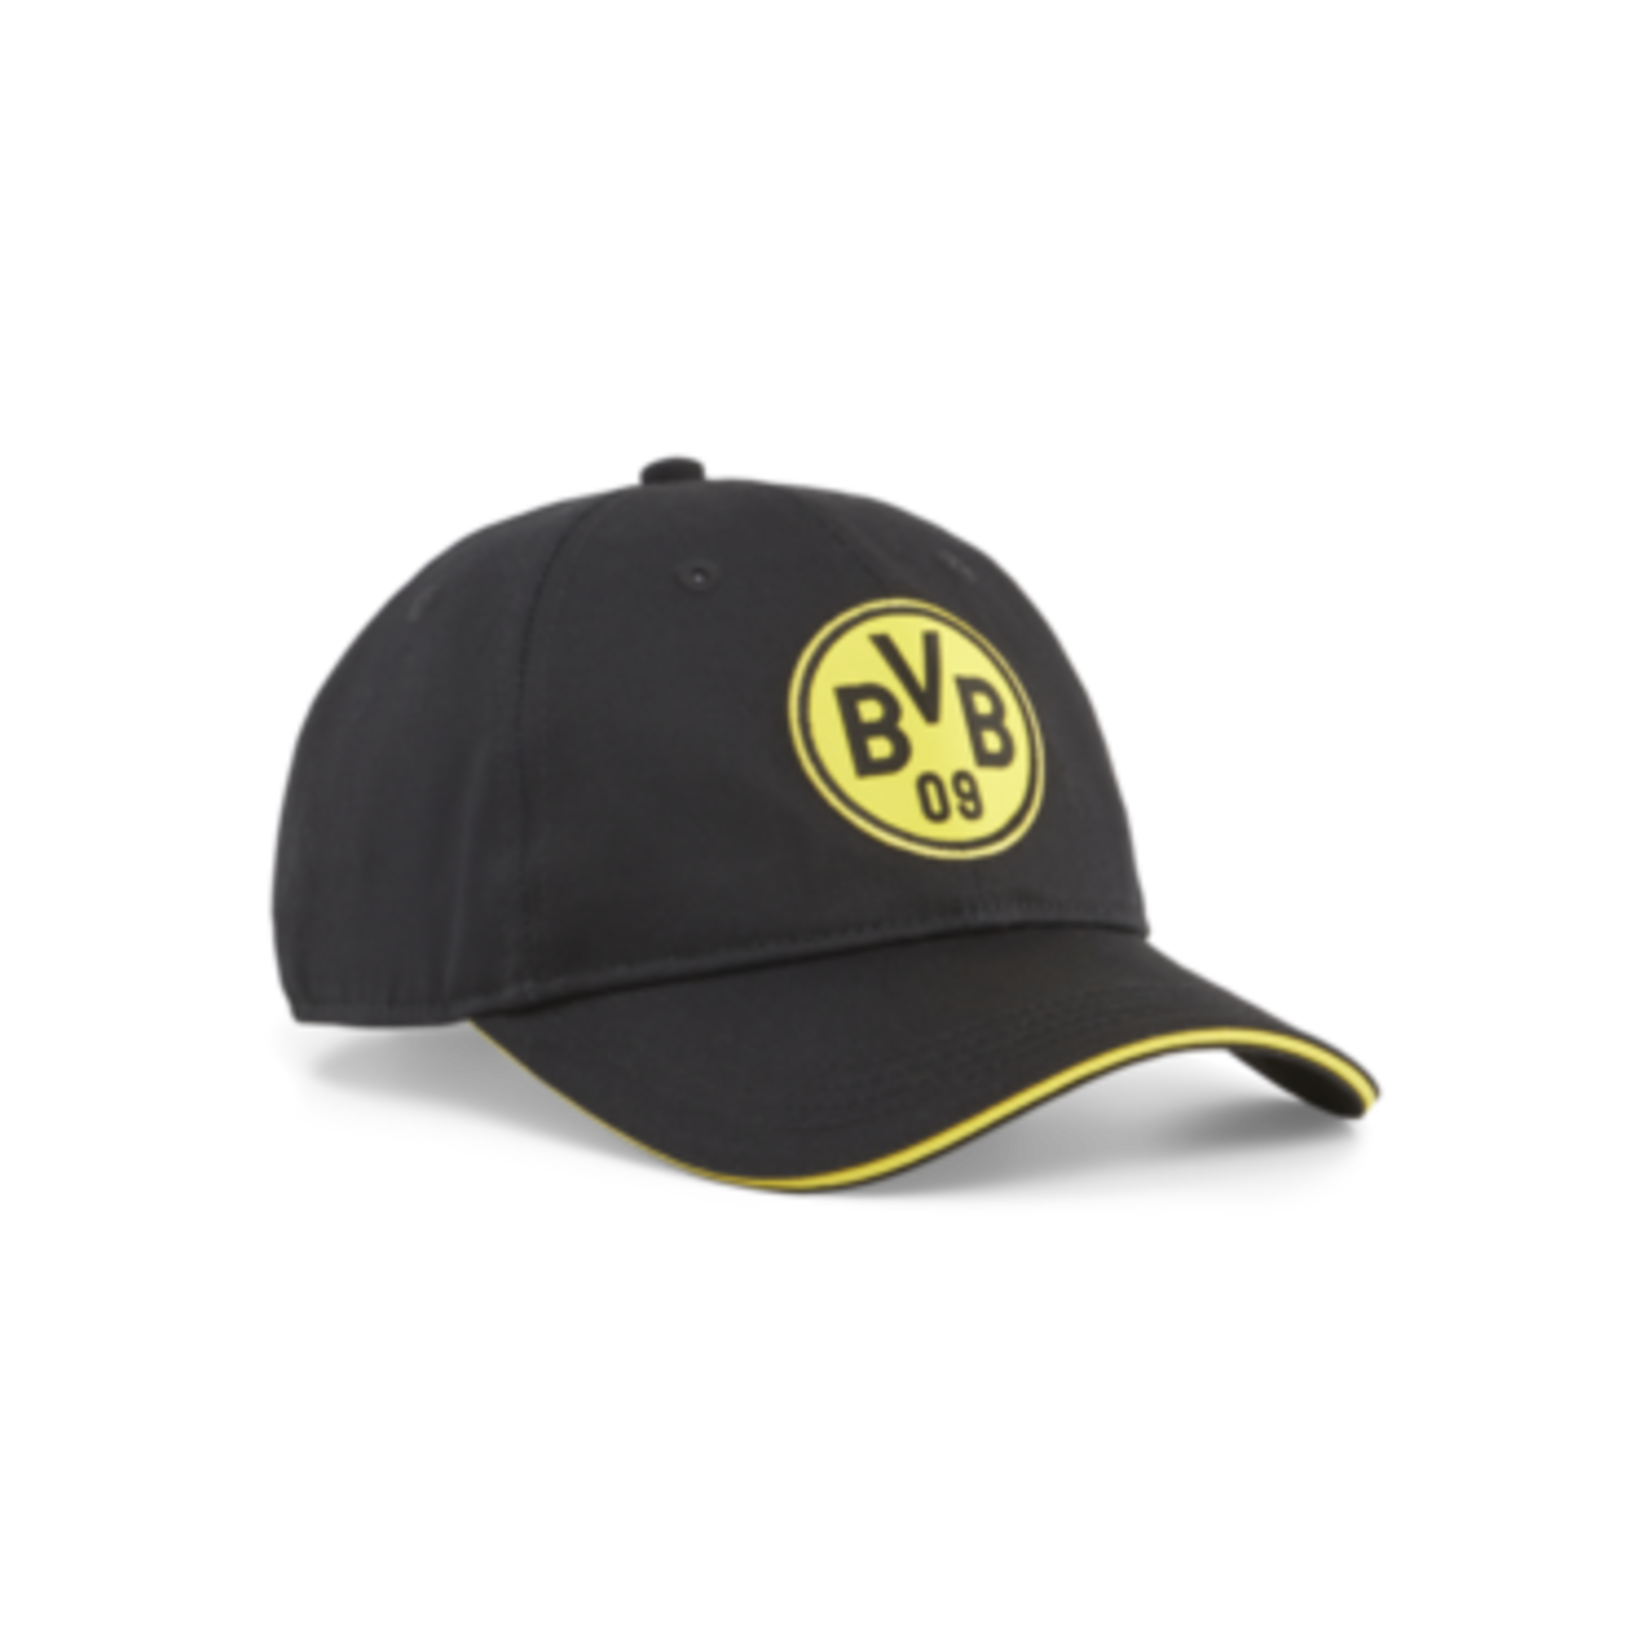 Puma Borussia Dortmund Team Cap - 024863 01